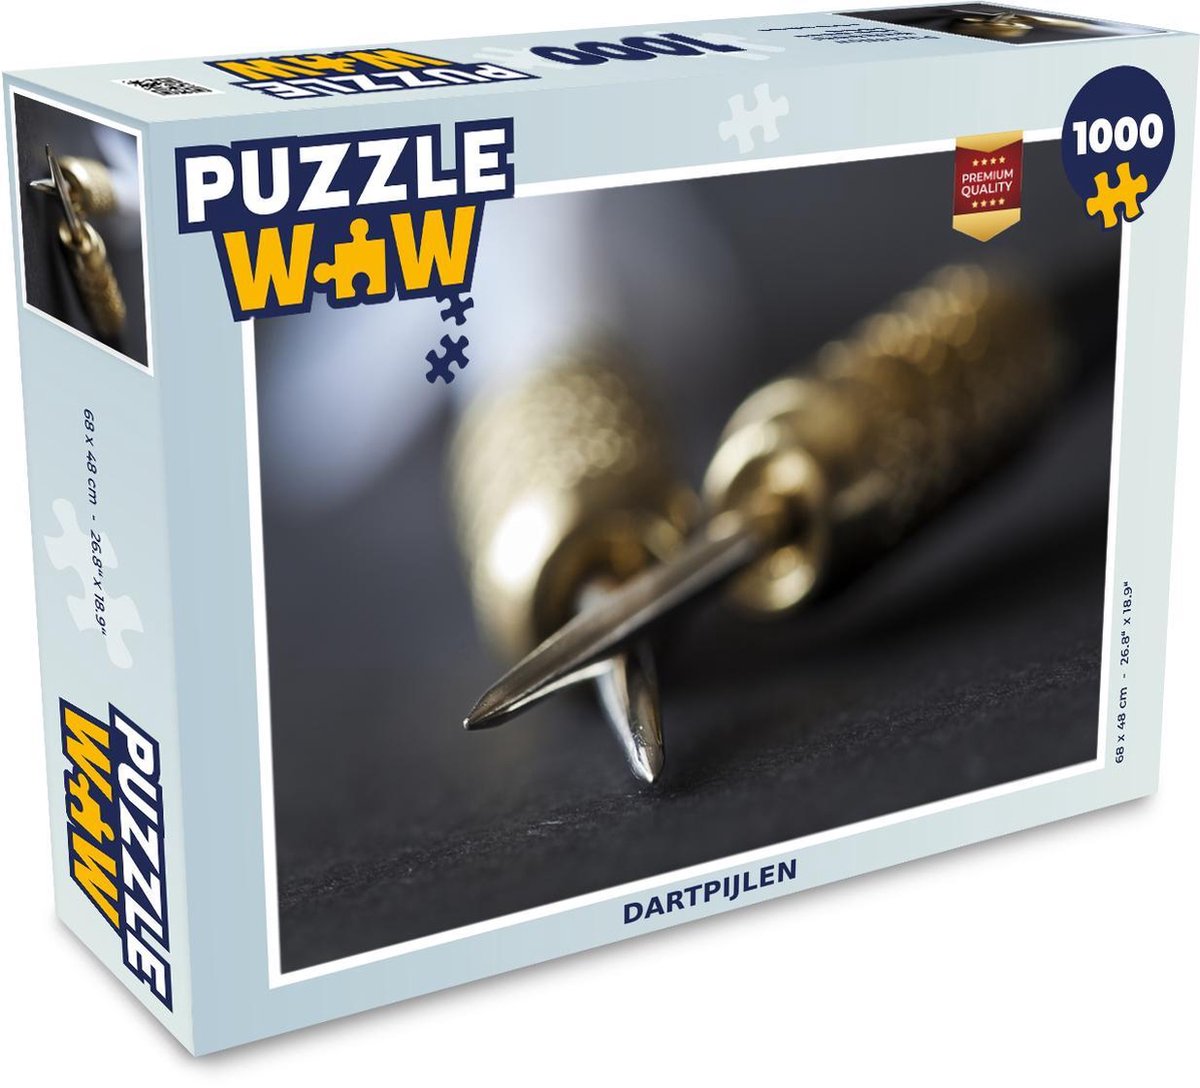 Puzzel 1000 stukjes volwassenen Darten 1000 stukjes - Dartpijlen - PuzzleWow heeft +100000 puzzels